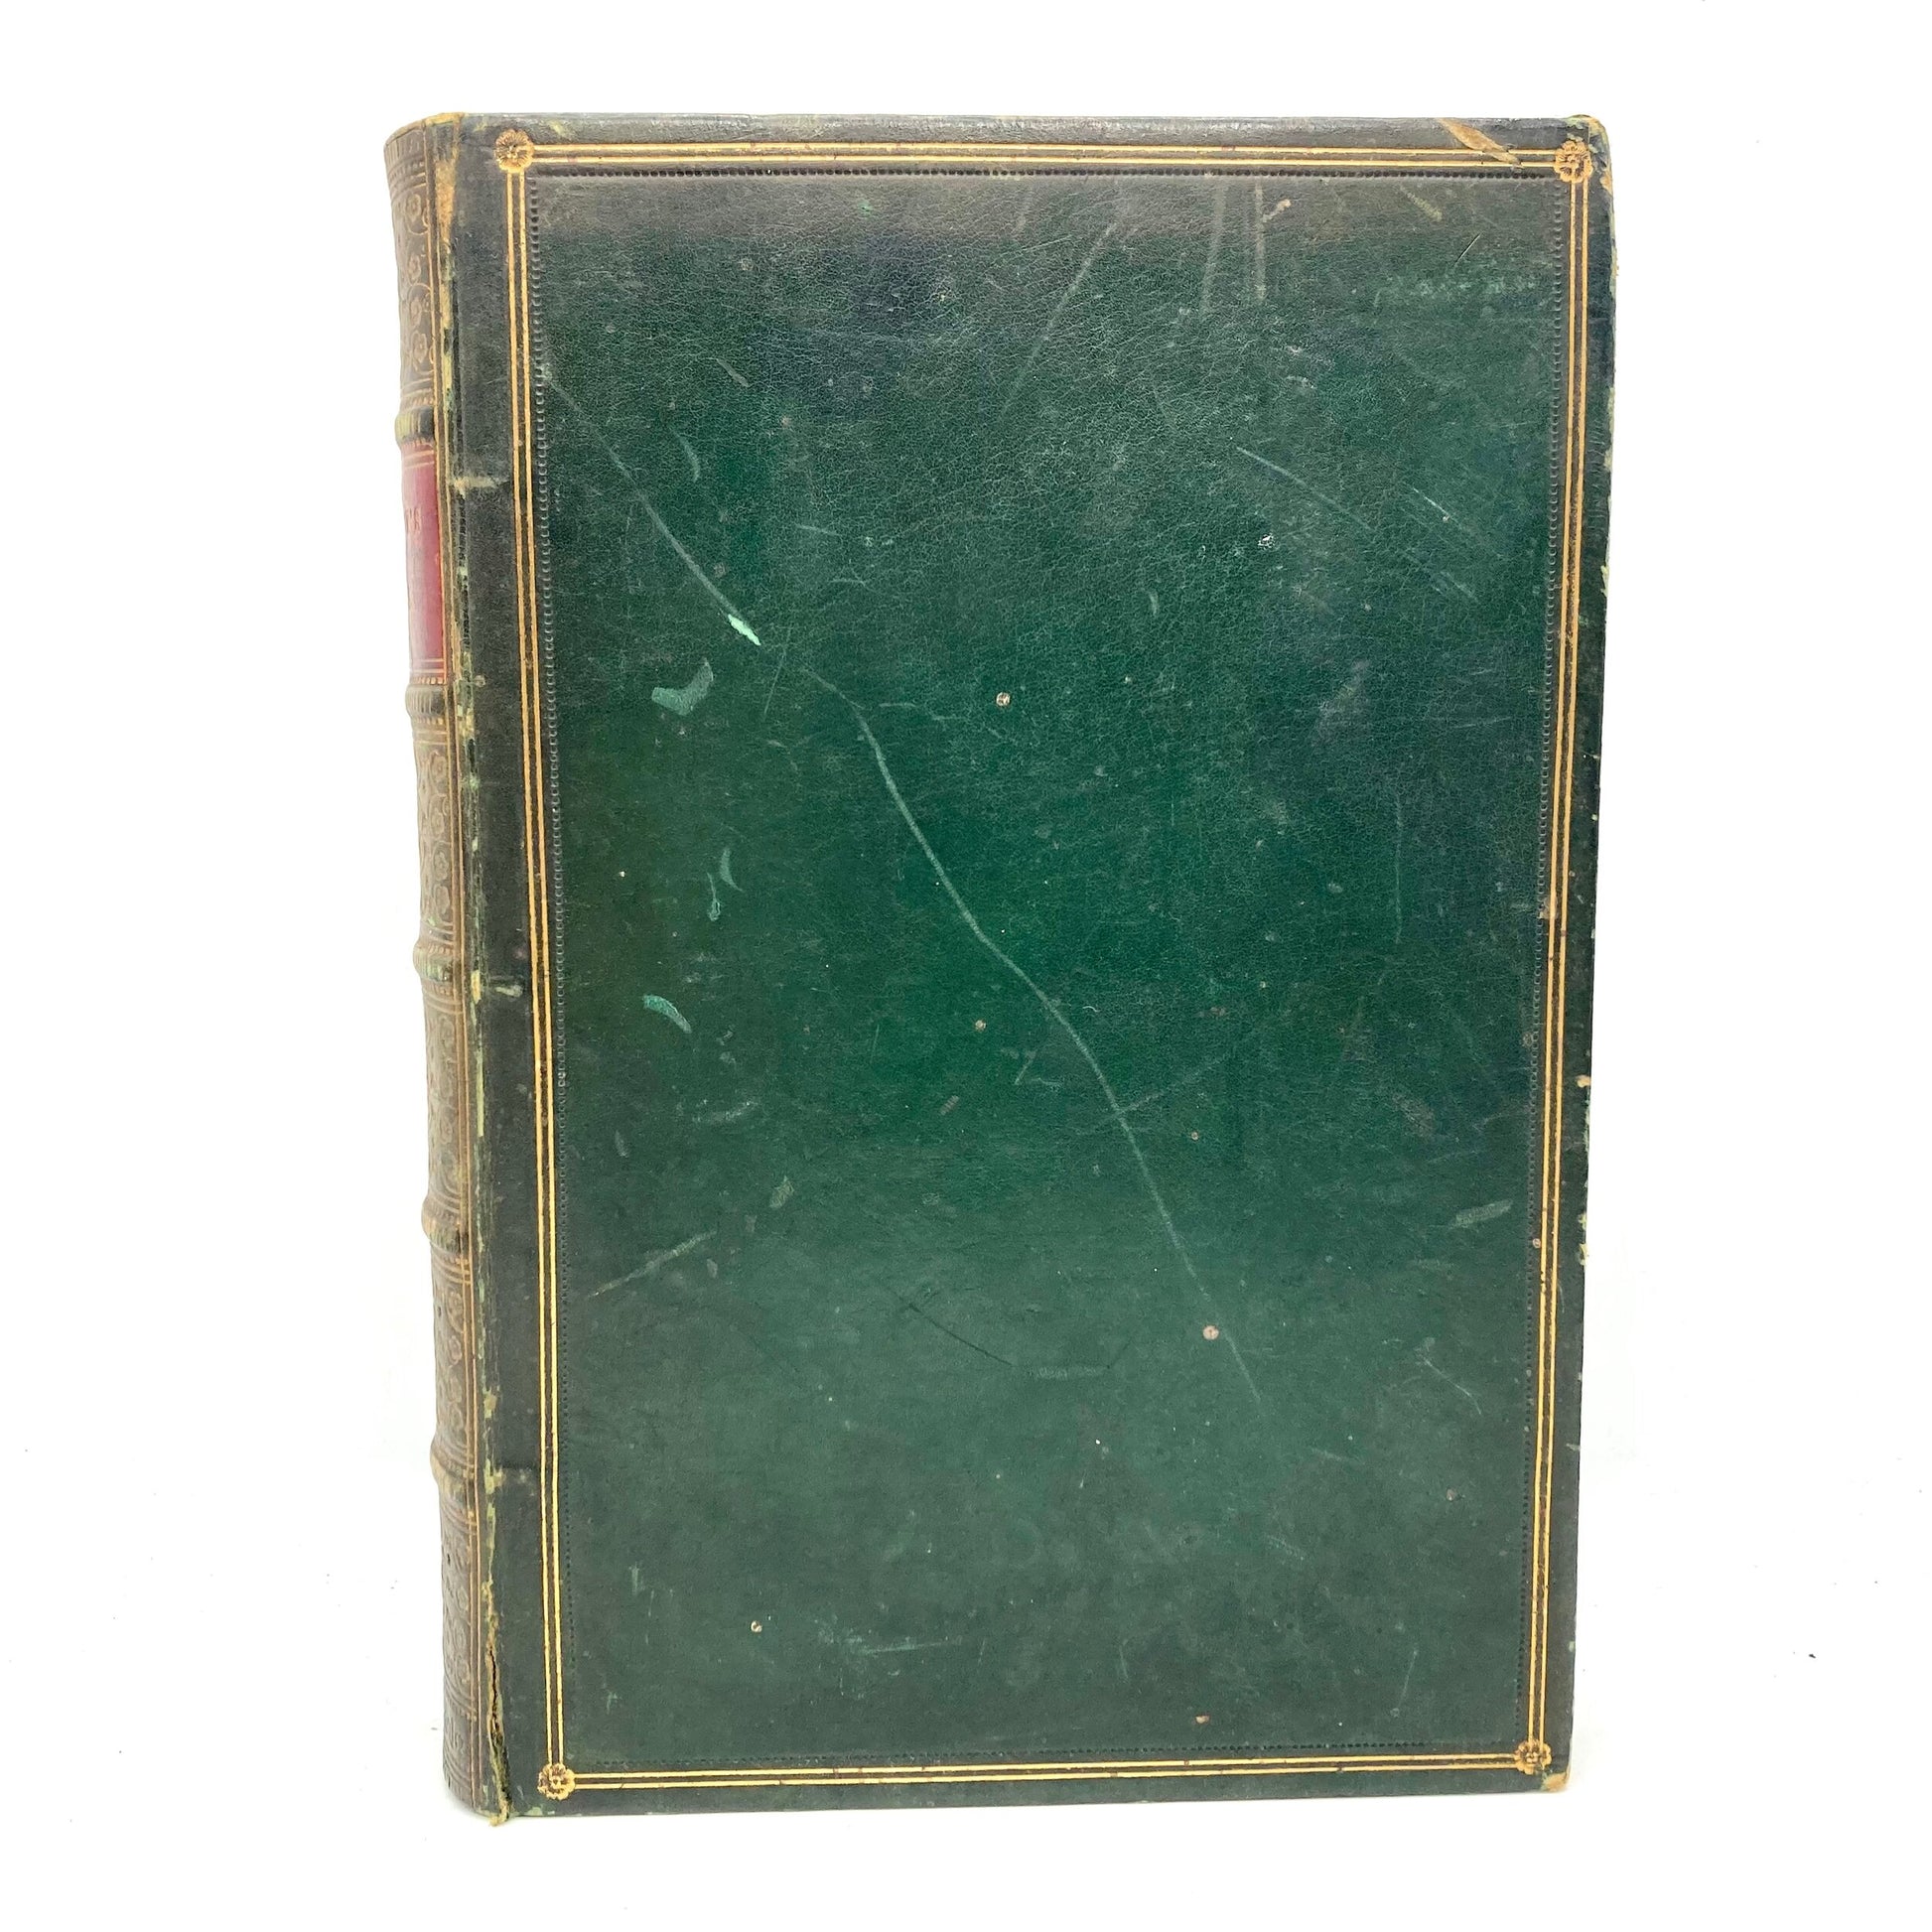 LONGFELLOW, Henry Wadsworth "Poems" [David Bogue, 1852] - Buzz Bookstore